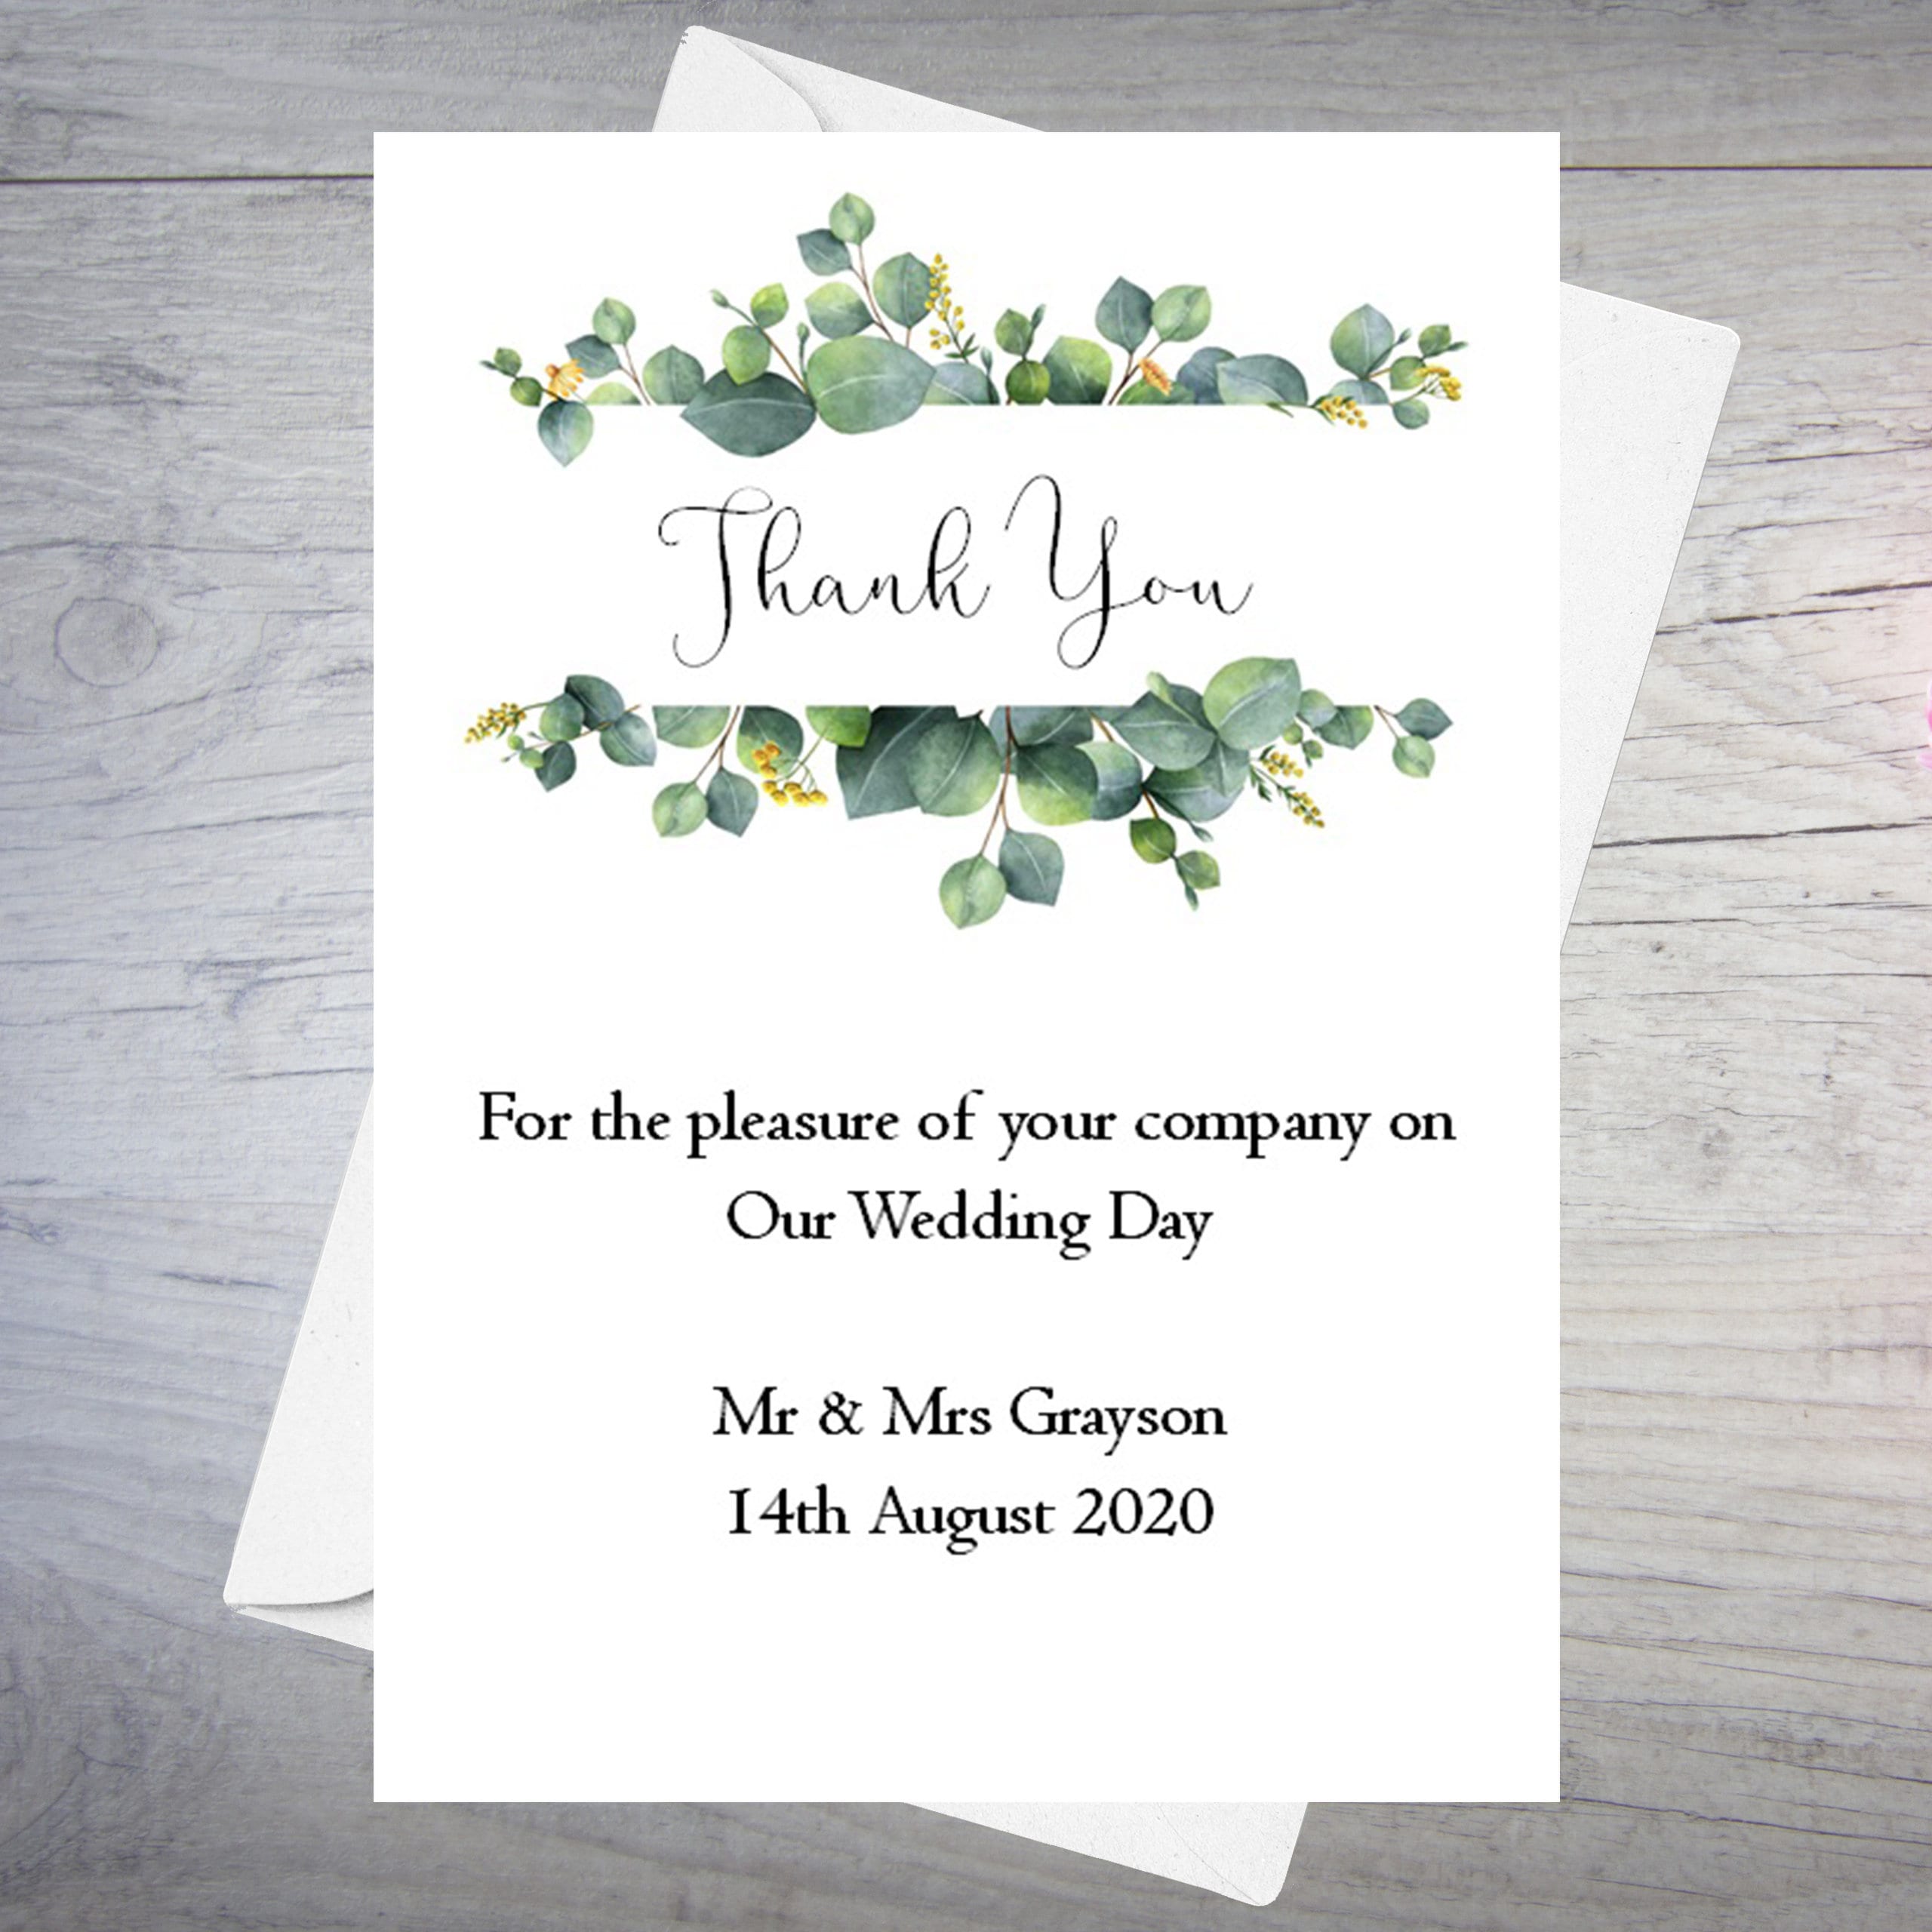 packs of 10 Photos Personalised Wedding Thank You Cards inc Envelopes 